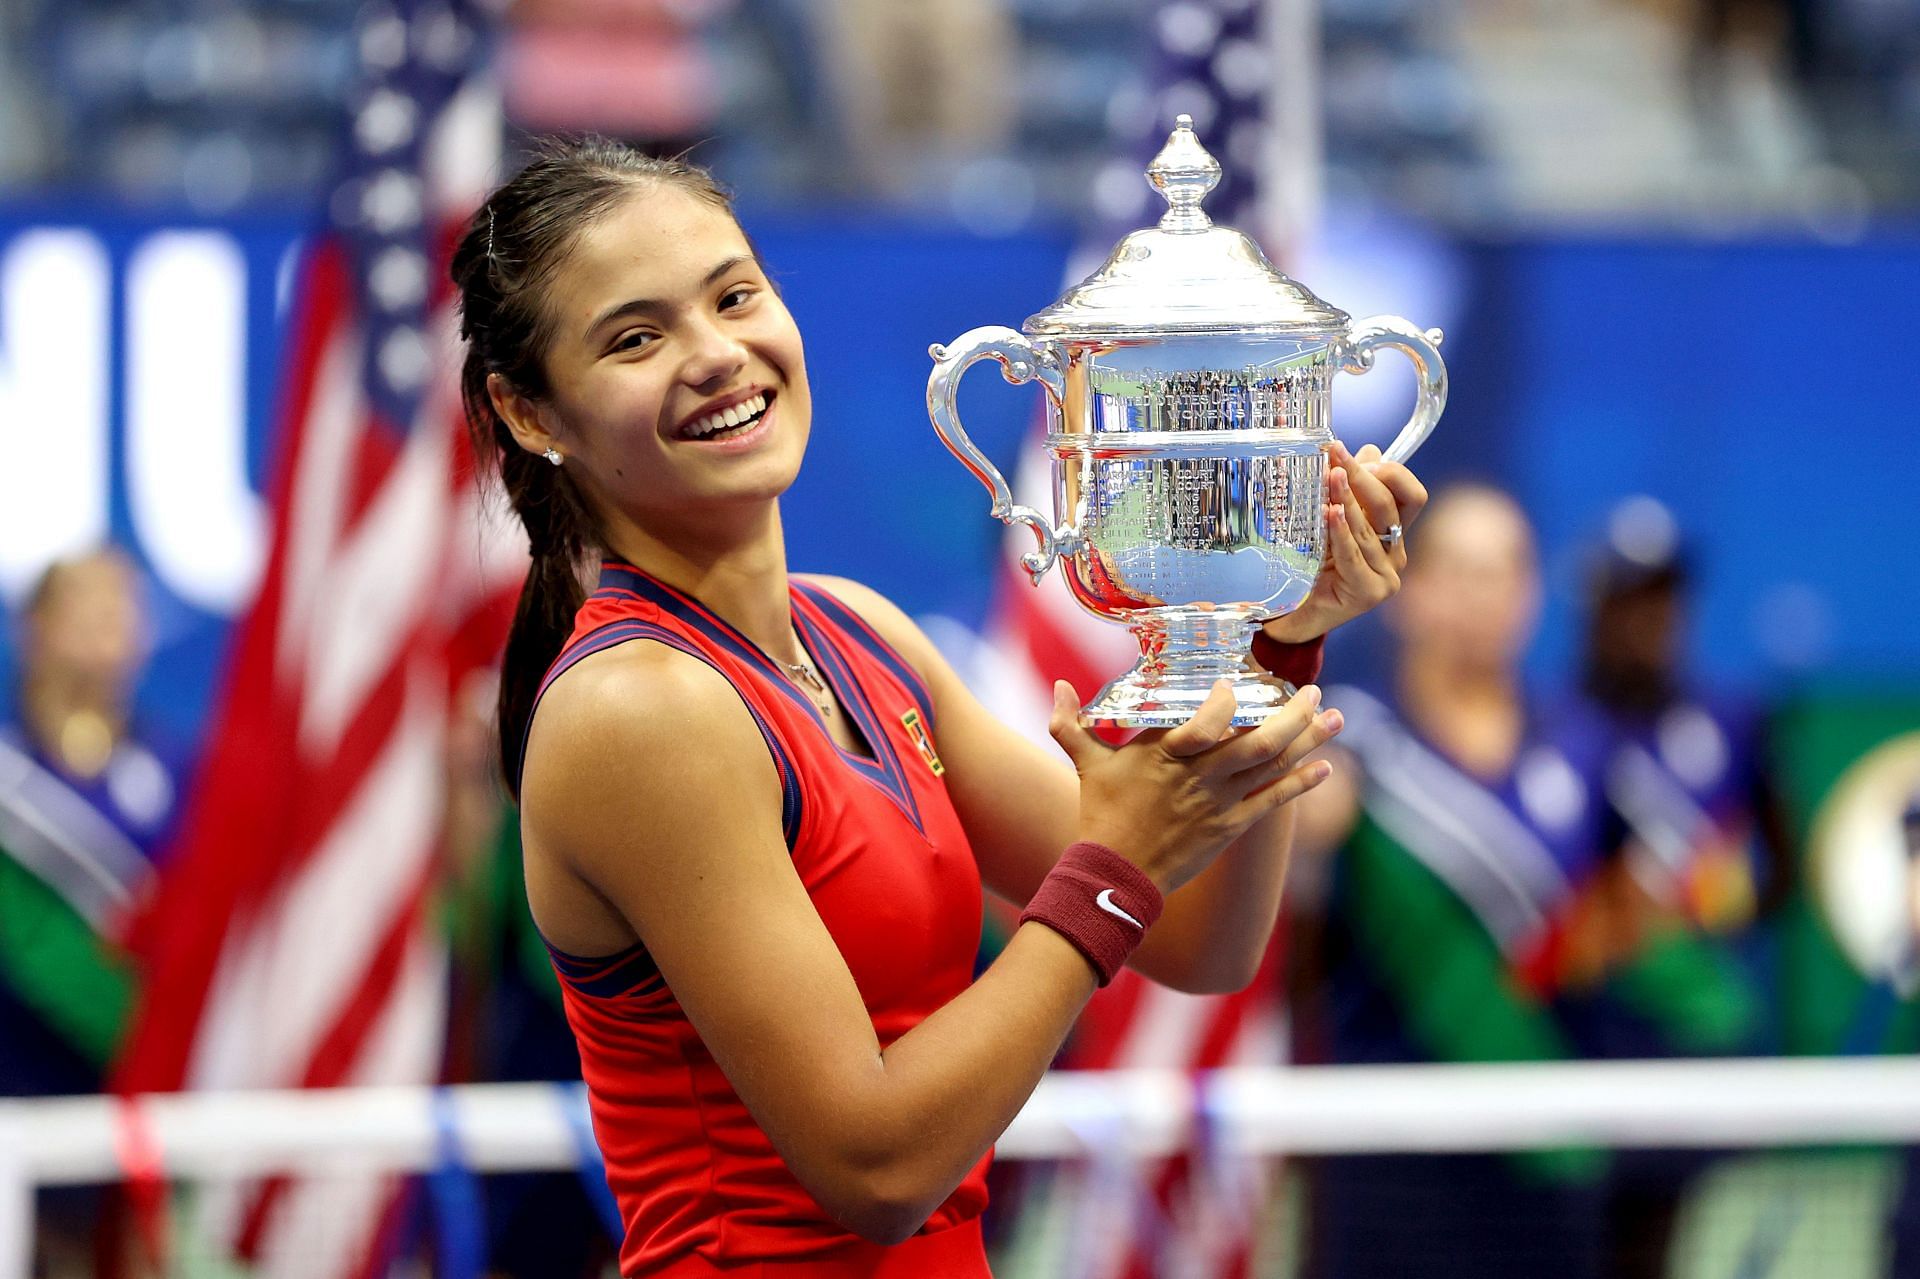 Emma Raducanu beat Leylah Fernandez in the final to win the 2021 US Open.